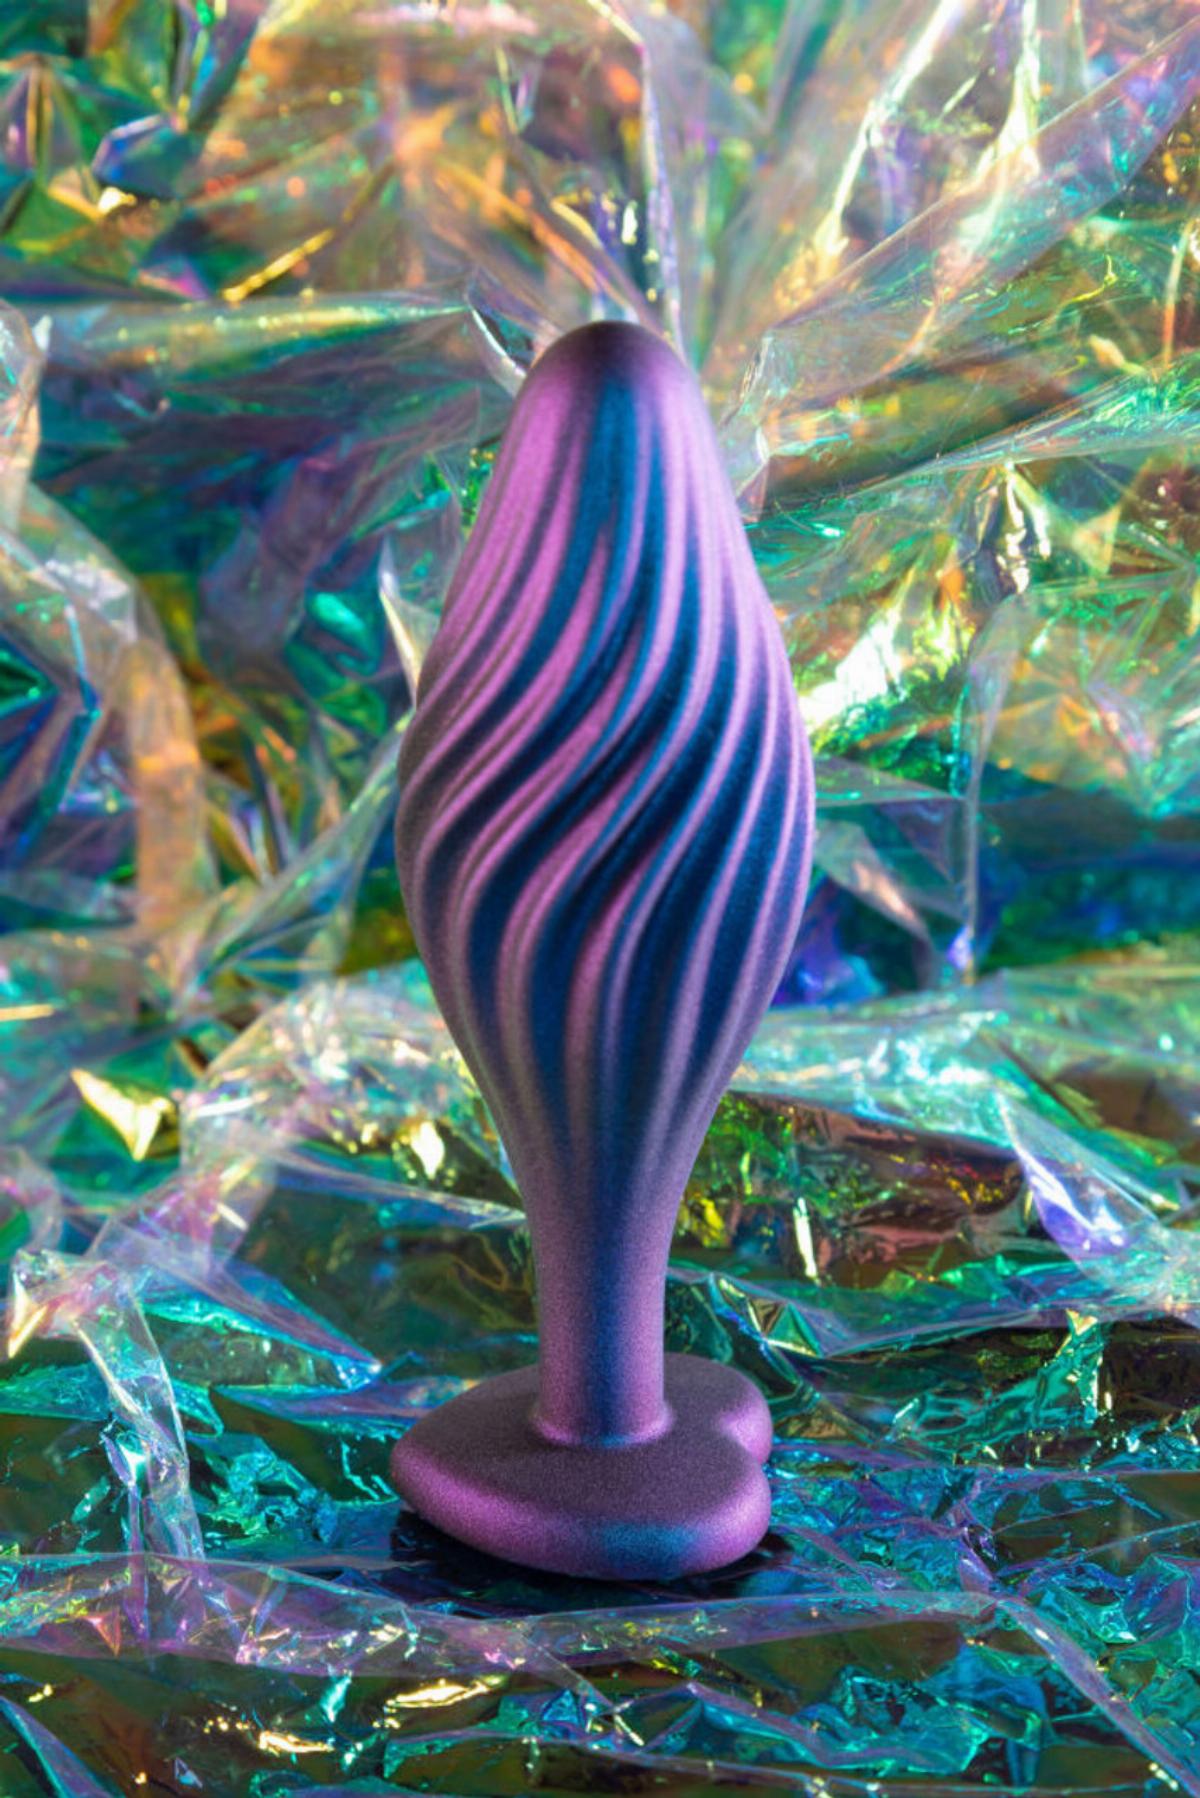 Anal Adventures Matrix - Swirling Bling Anaal Plug - Sapphire